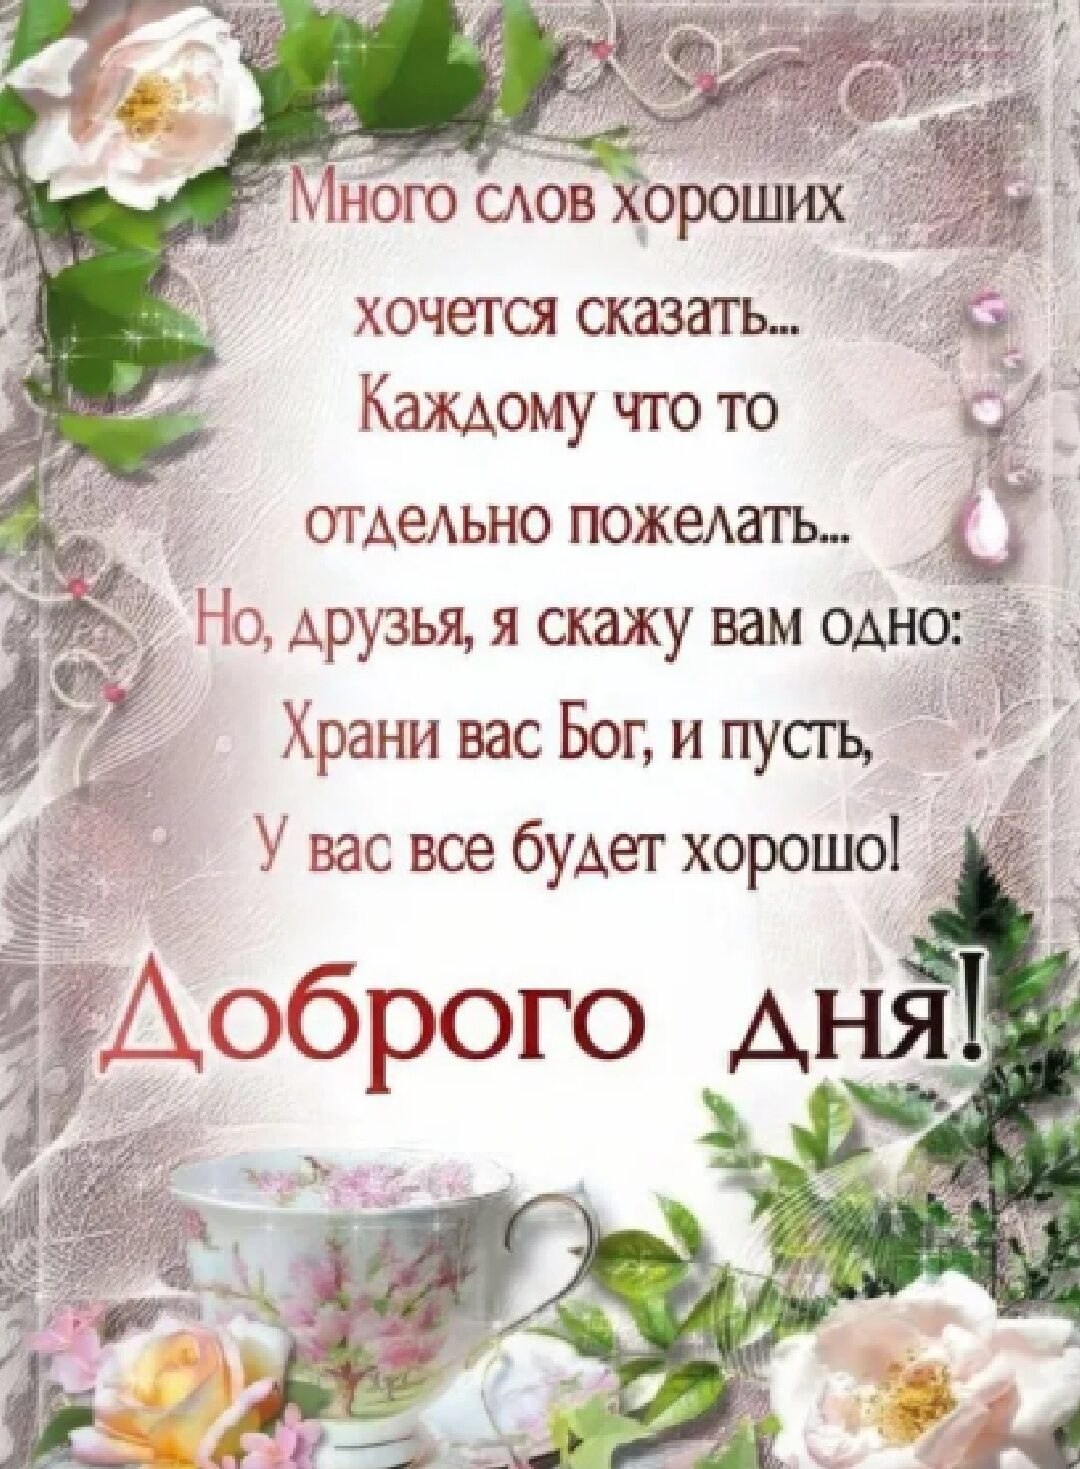 ***Victoria Viktorovna*** - 7  2024  04:07